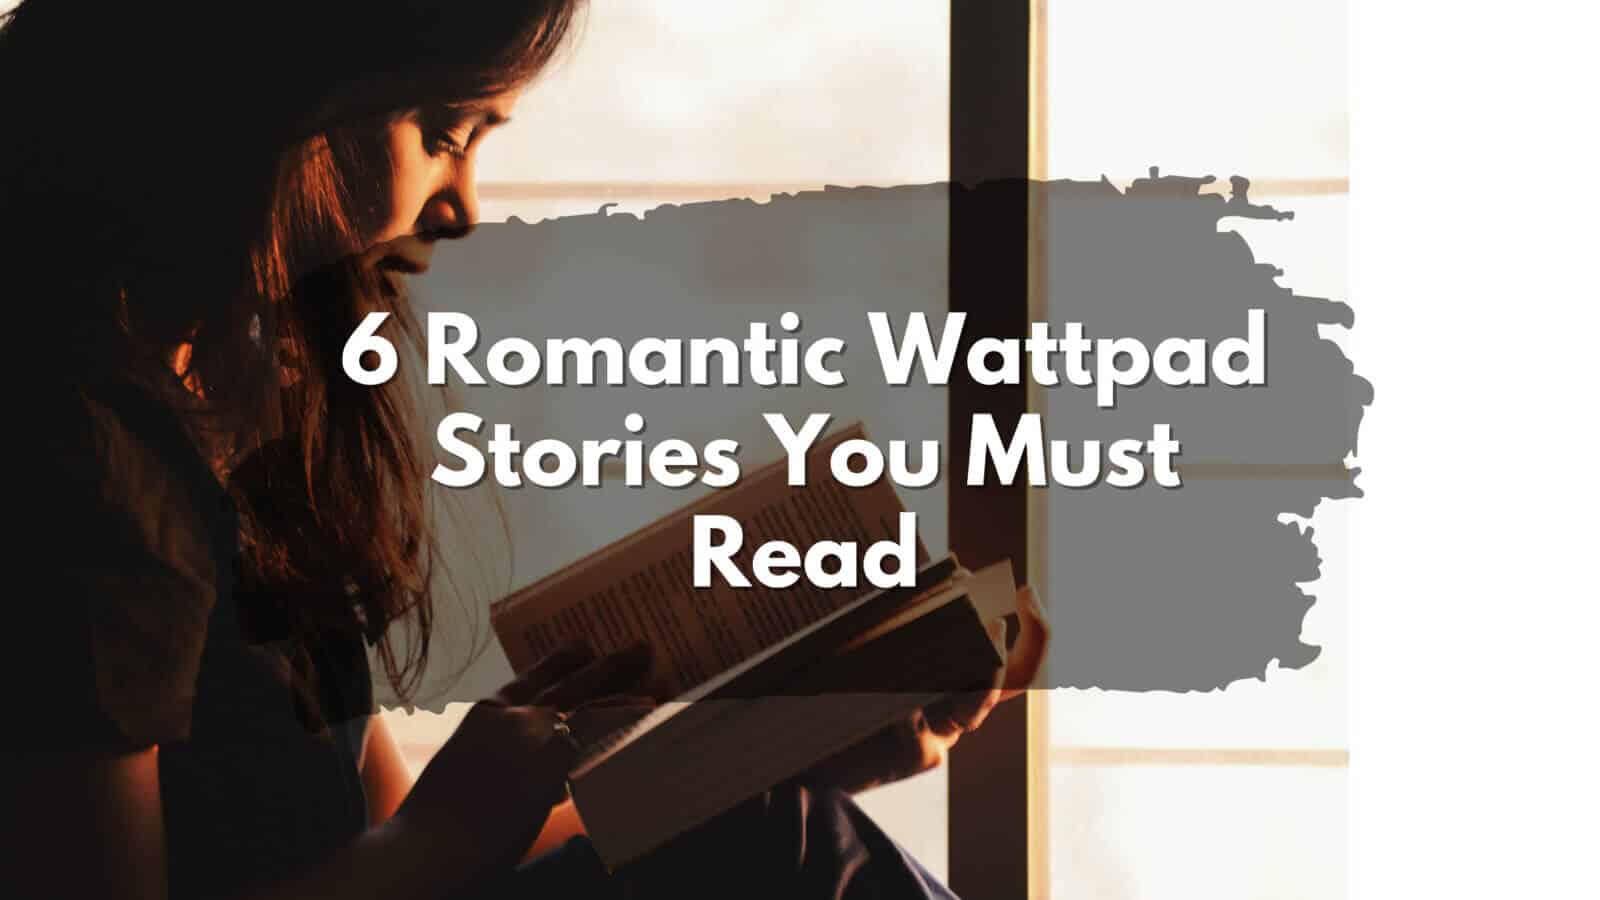 Keywords: Romantic, Wattpad

Description: 6 romantic Wattpad stories you must read.